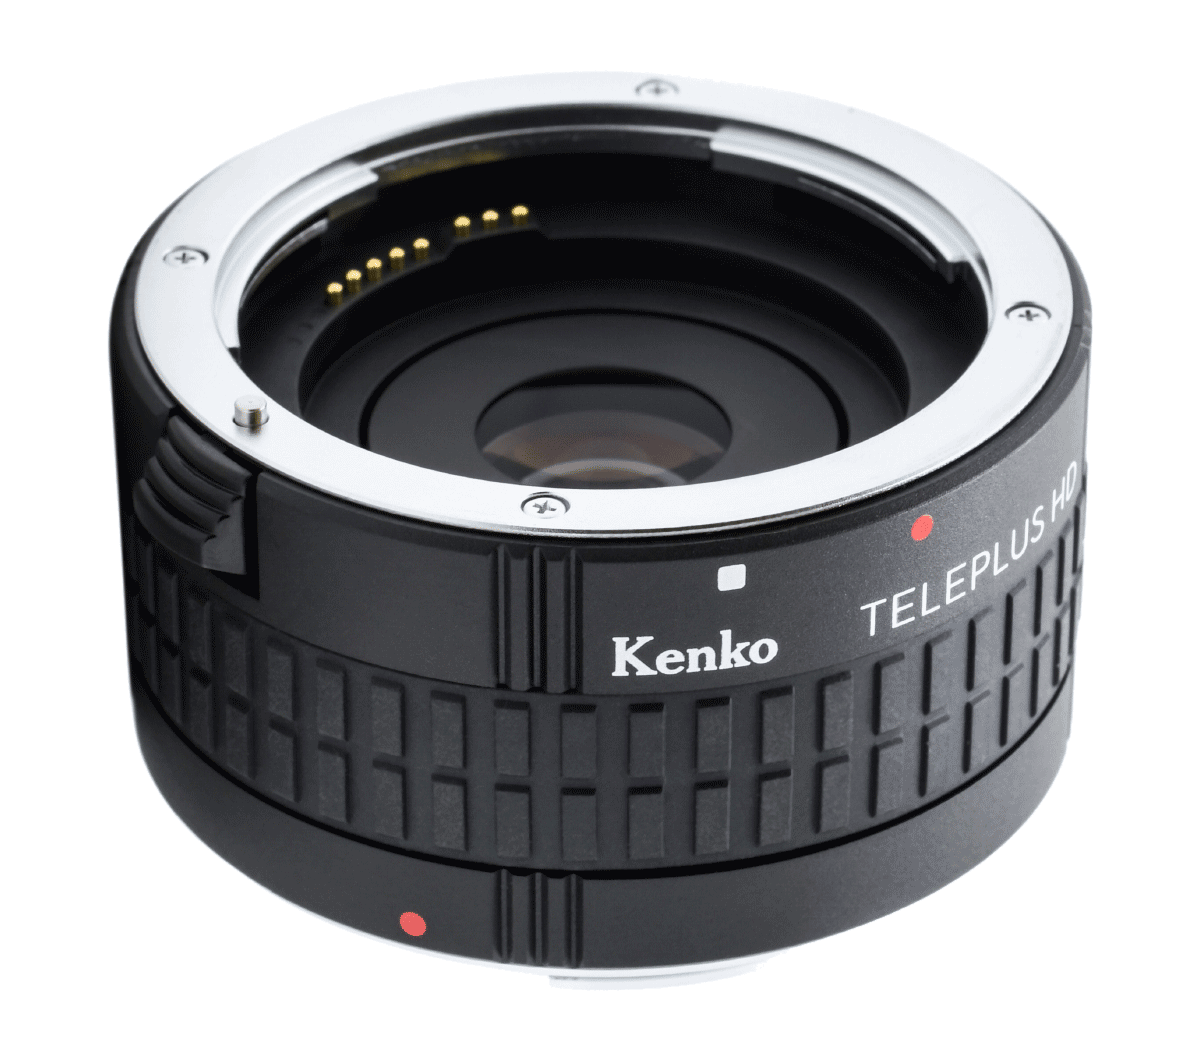 Kenko Teleplus 2x HD DGX Teleconverter for Nikon